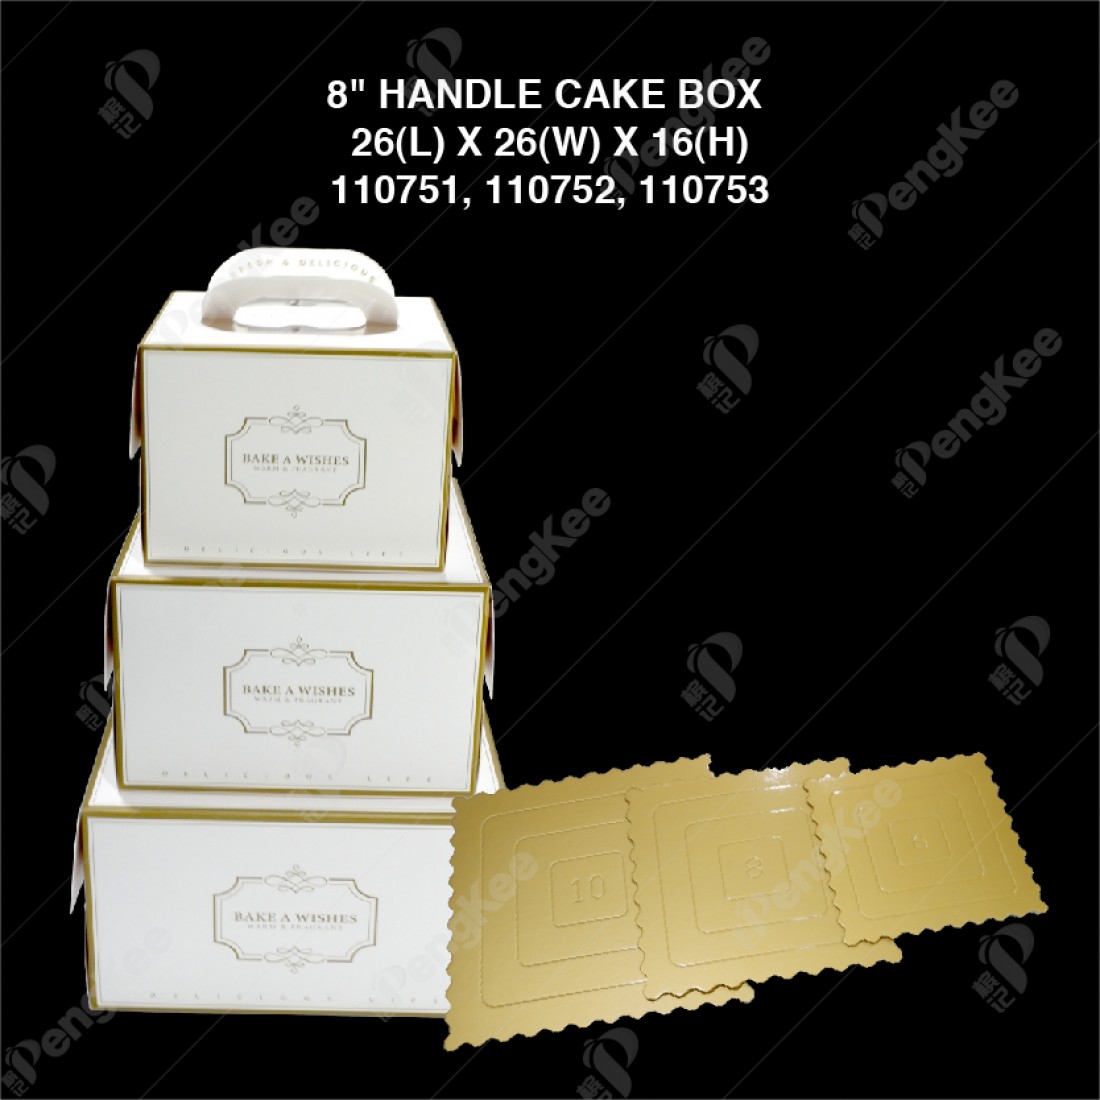 8" HANDLE CAKE BOX (26(L)*26(W)*16(H)CM) 